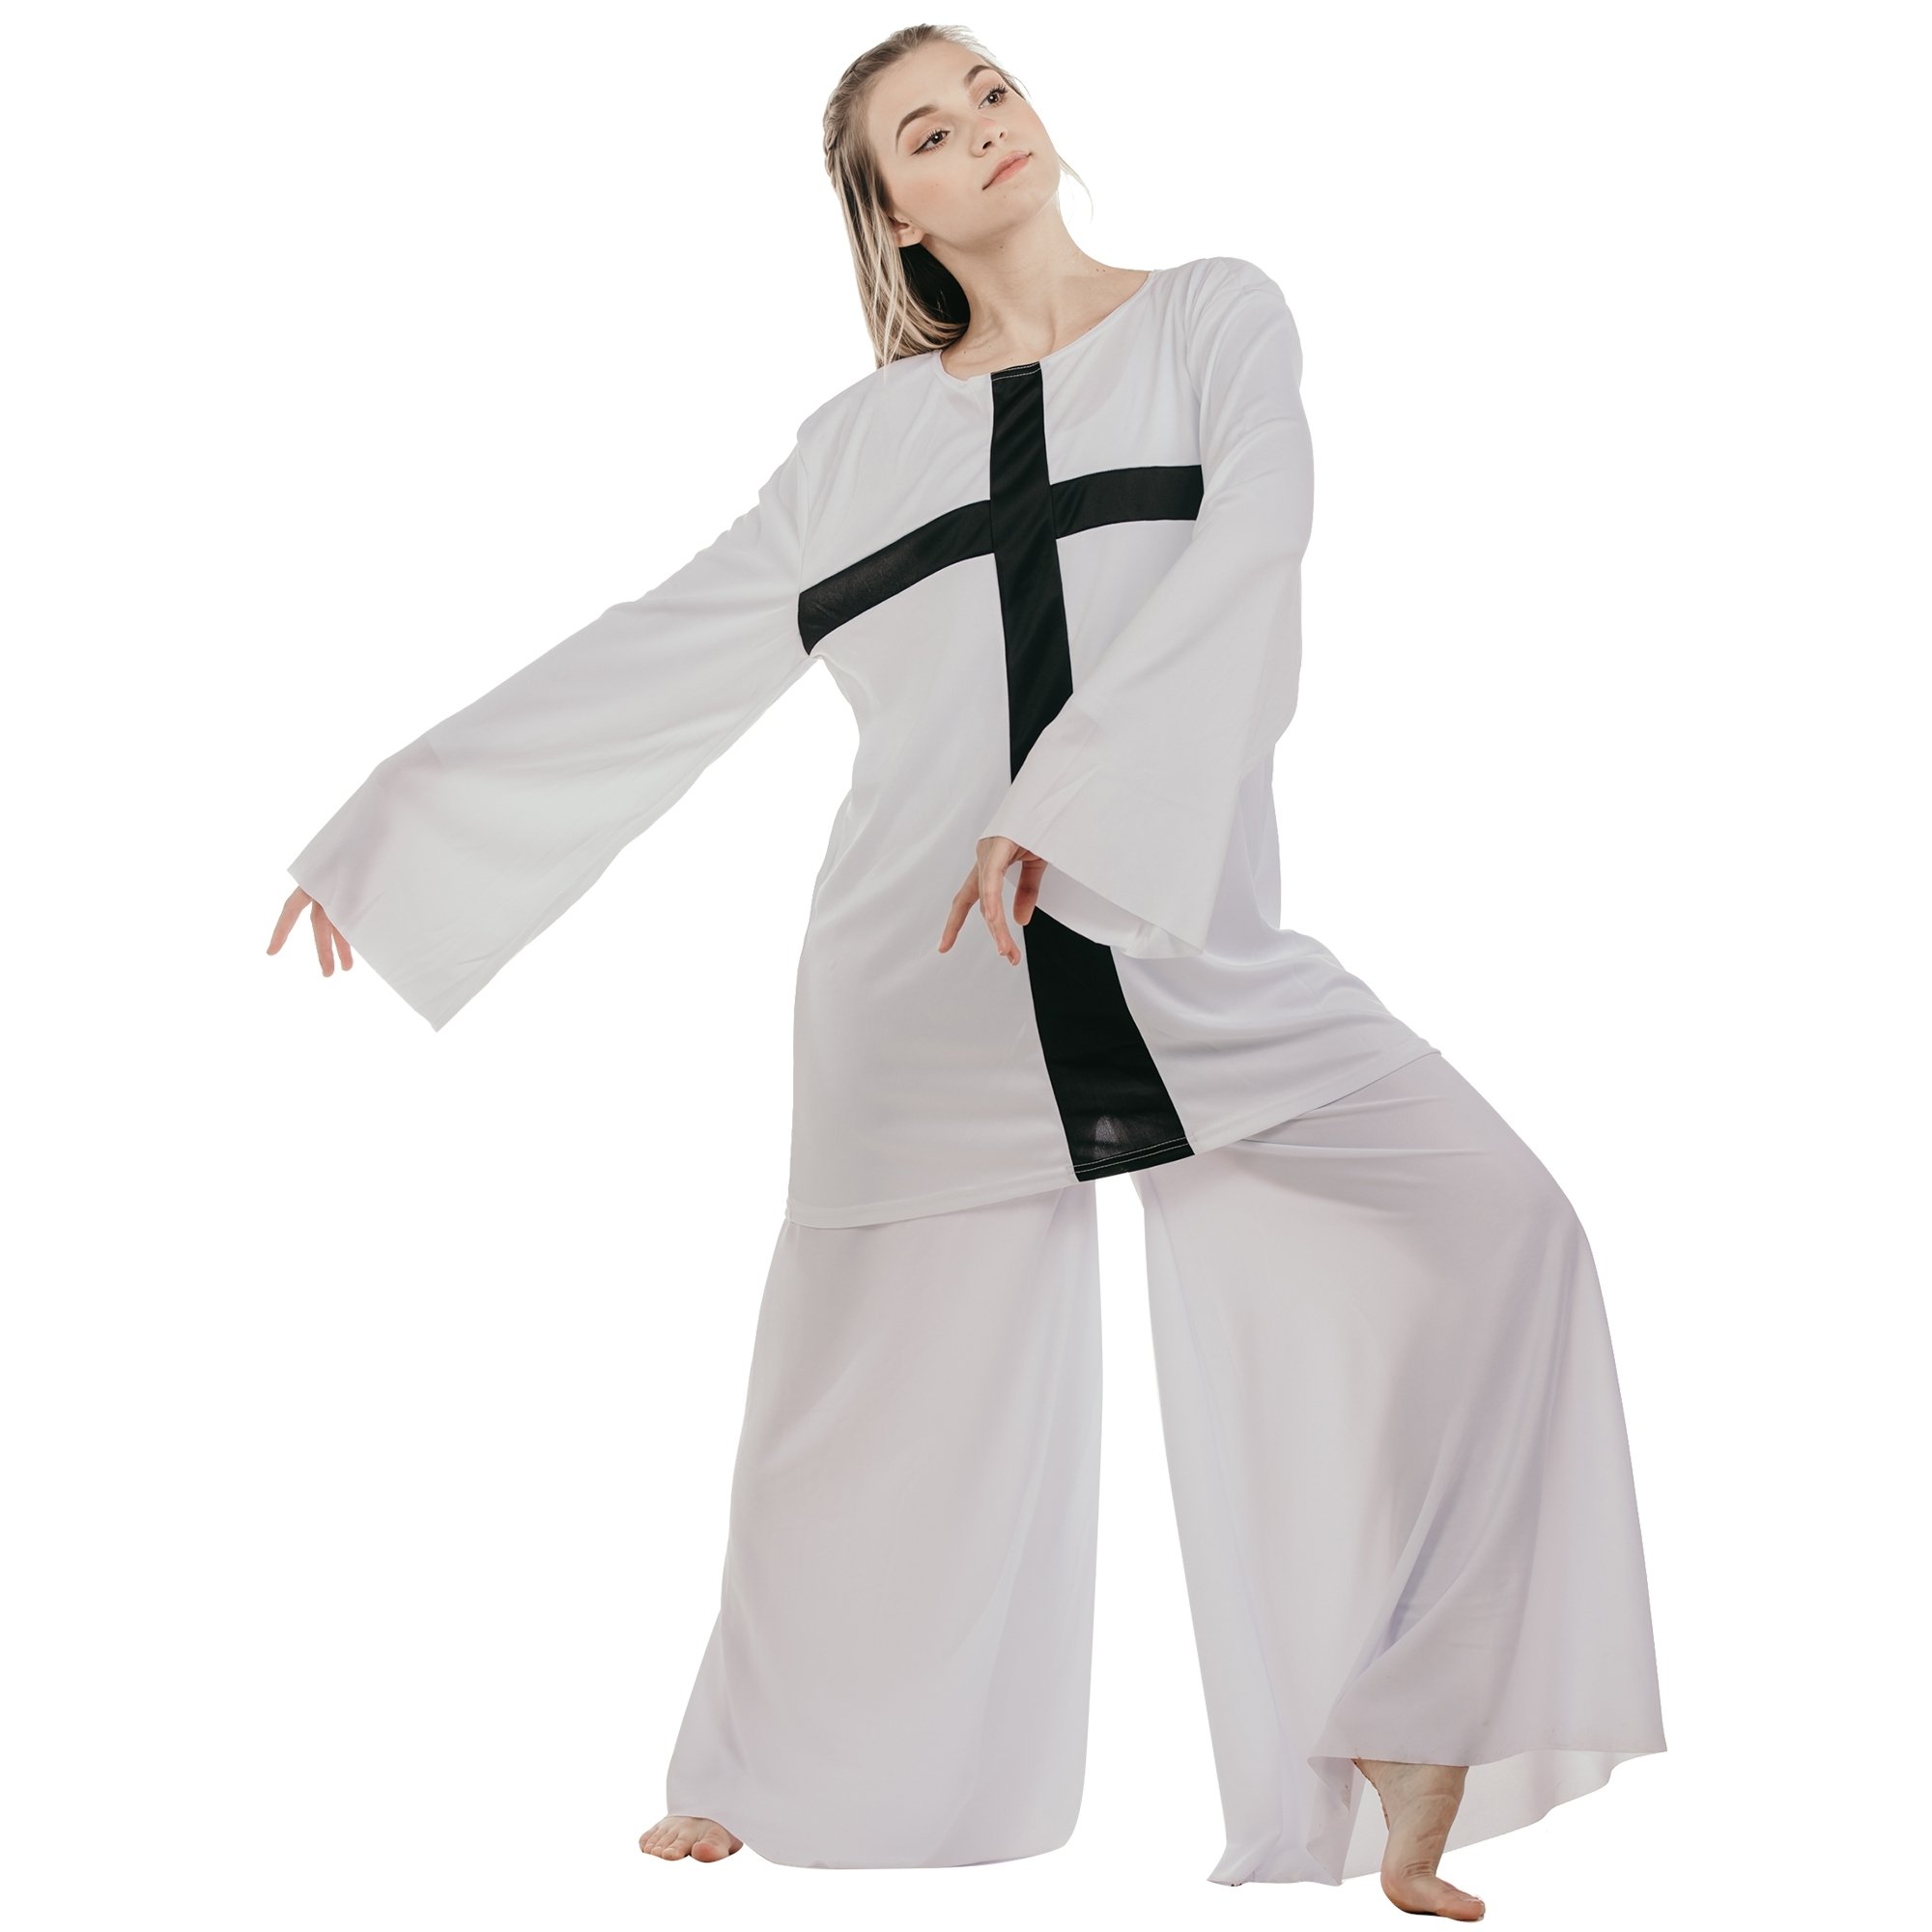 Danzcue Praise Dance Cross Inspired Tunic - Click Image to Close